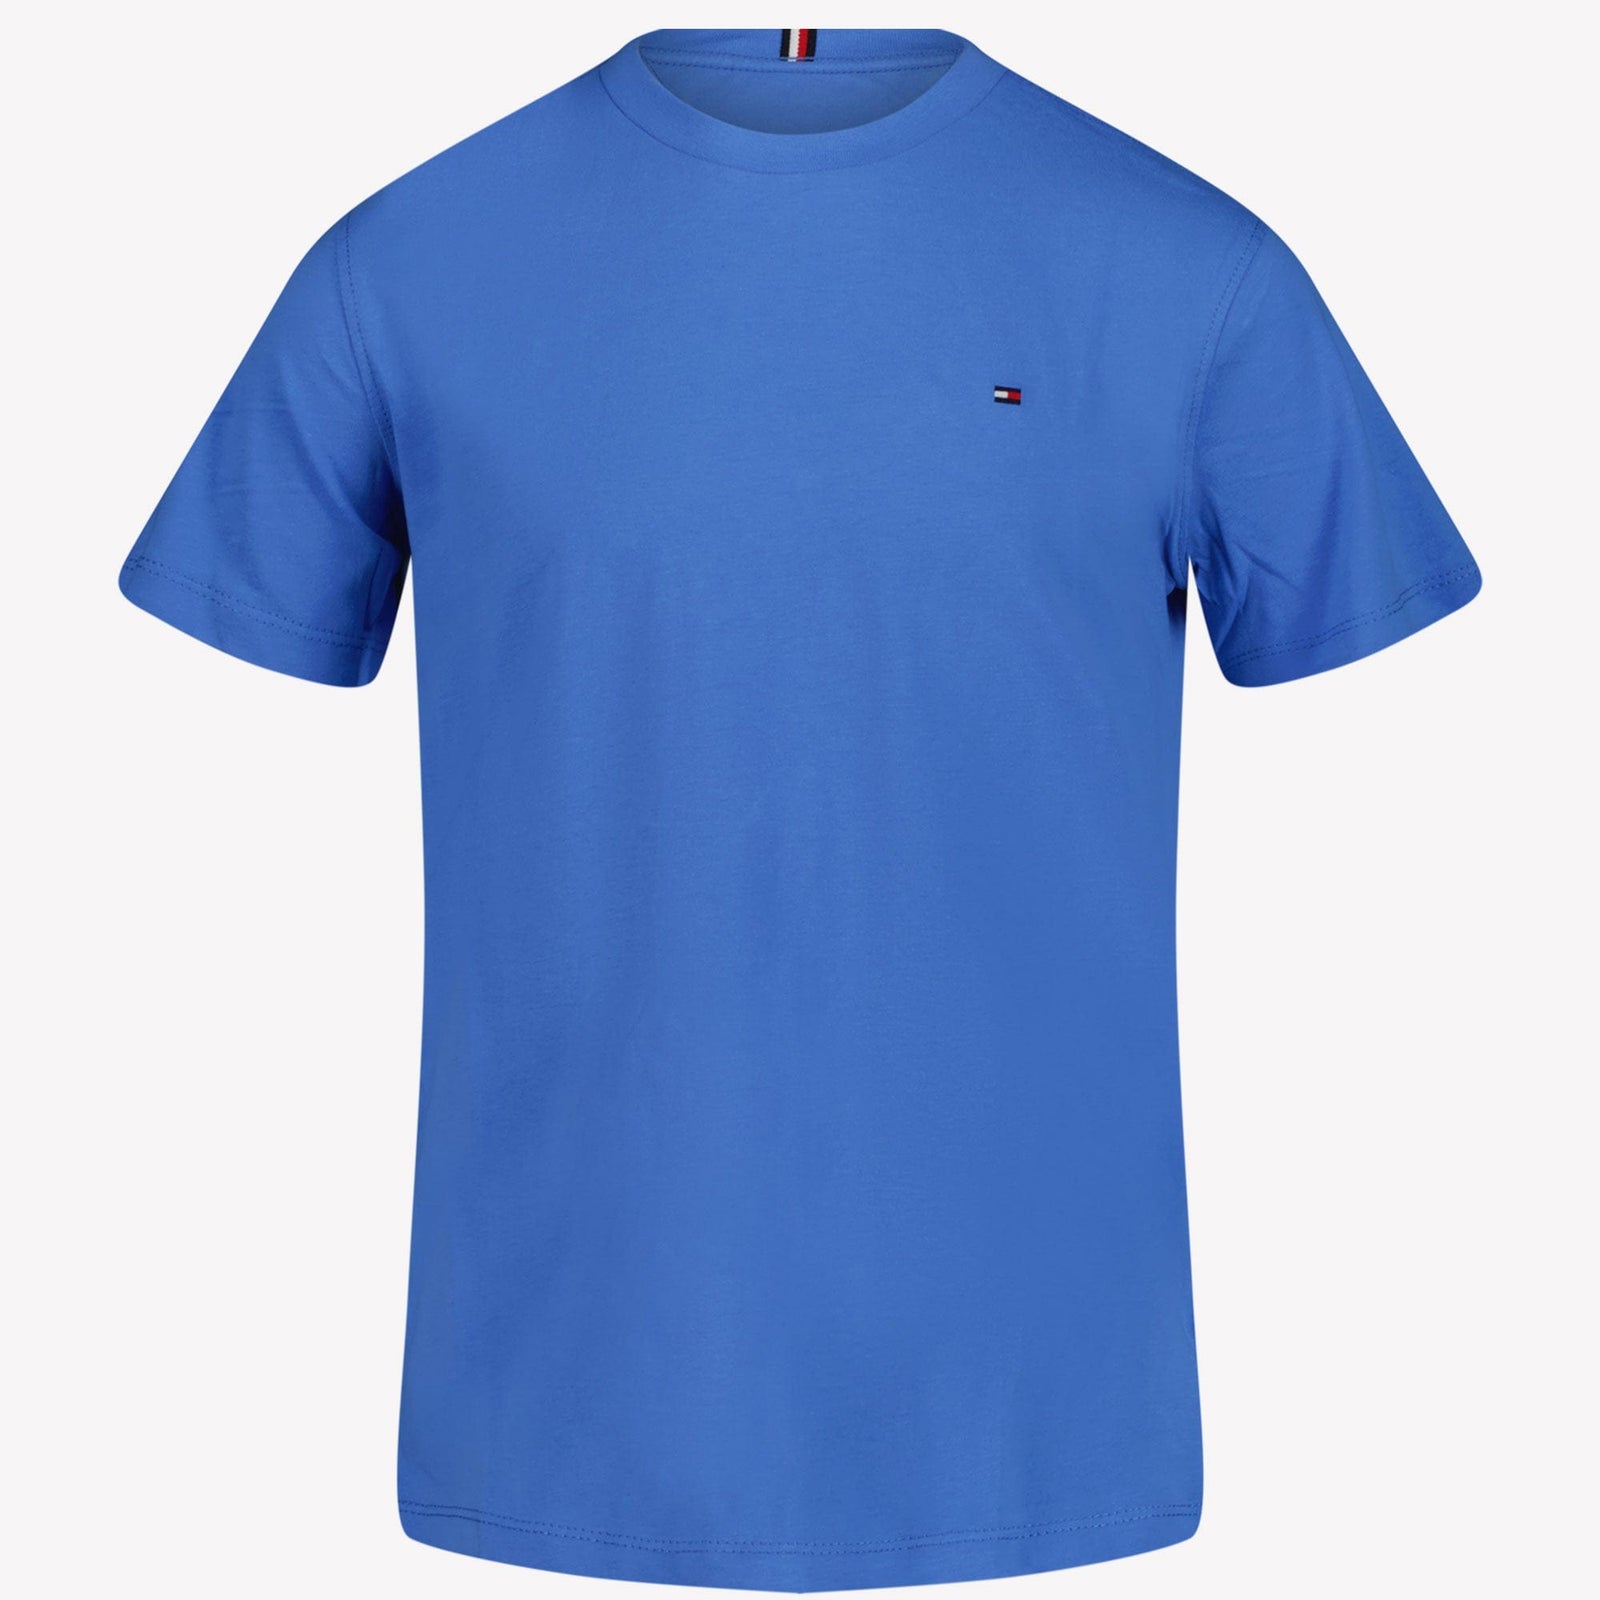 Tommy Hilfiger Kinder Jongens T-shirt Blauw 4Y